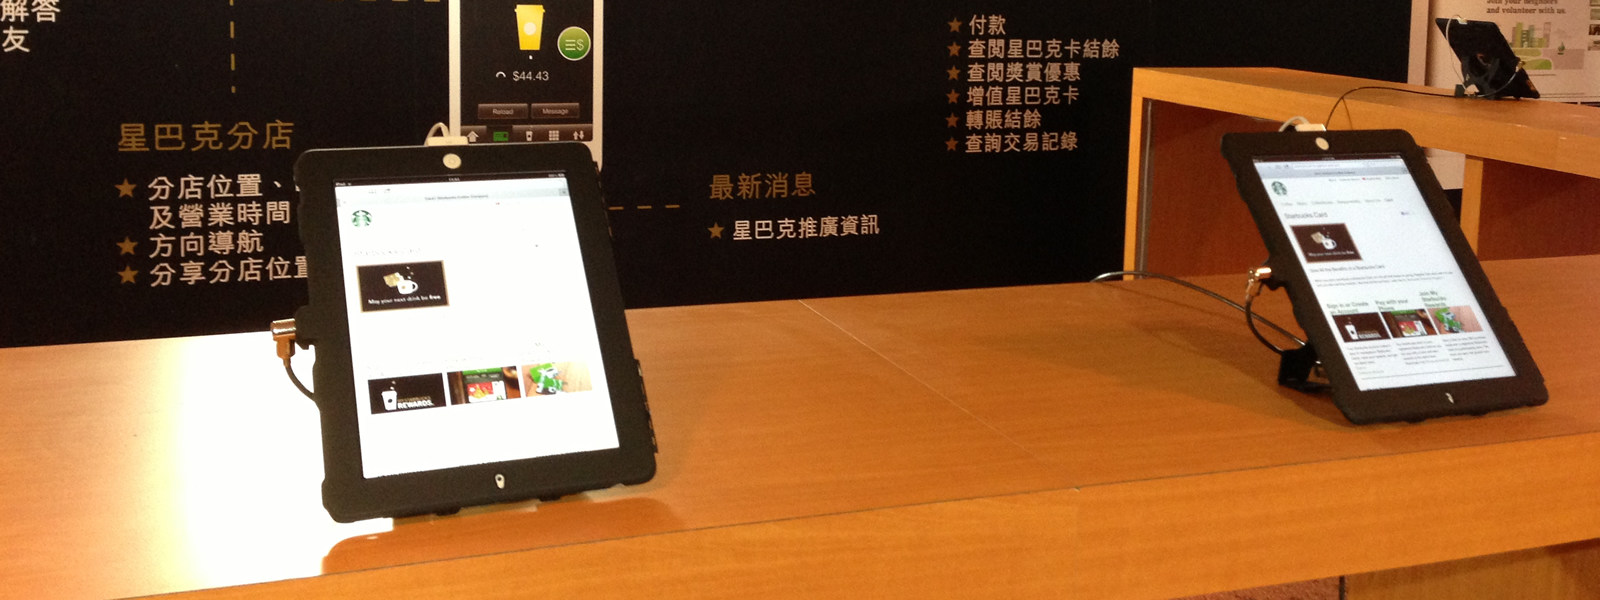 iPad Rental Hong Kong Starbucks